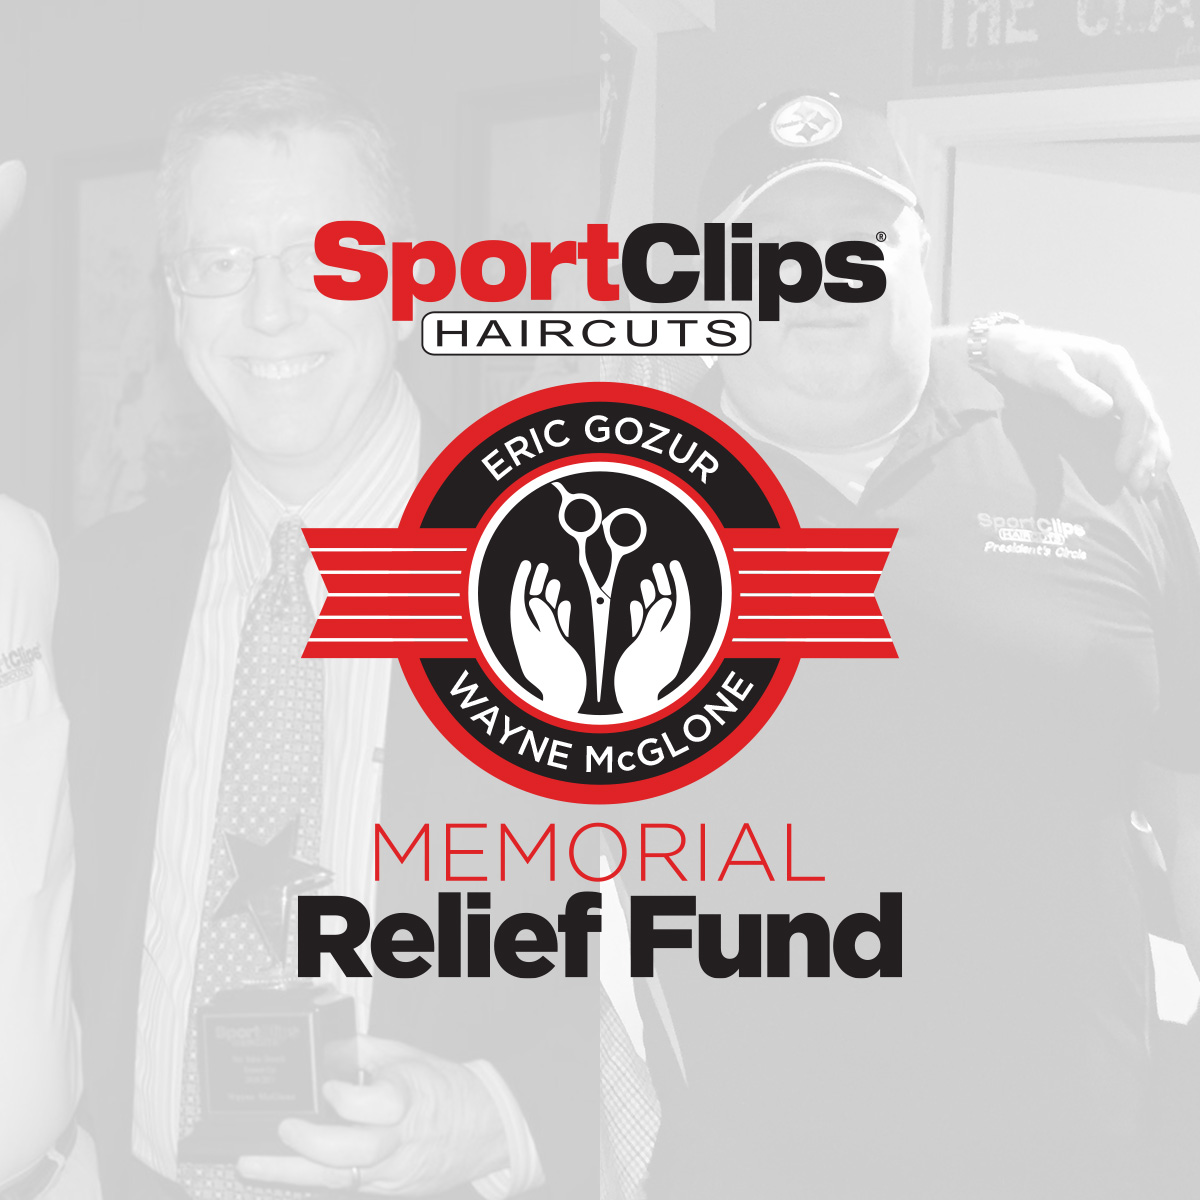 Sport Clips Memorial Relief Fund logo